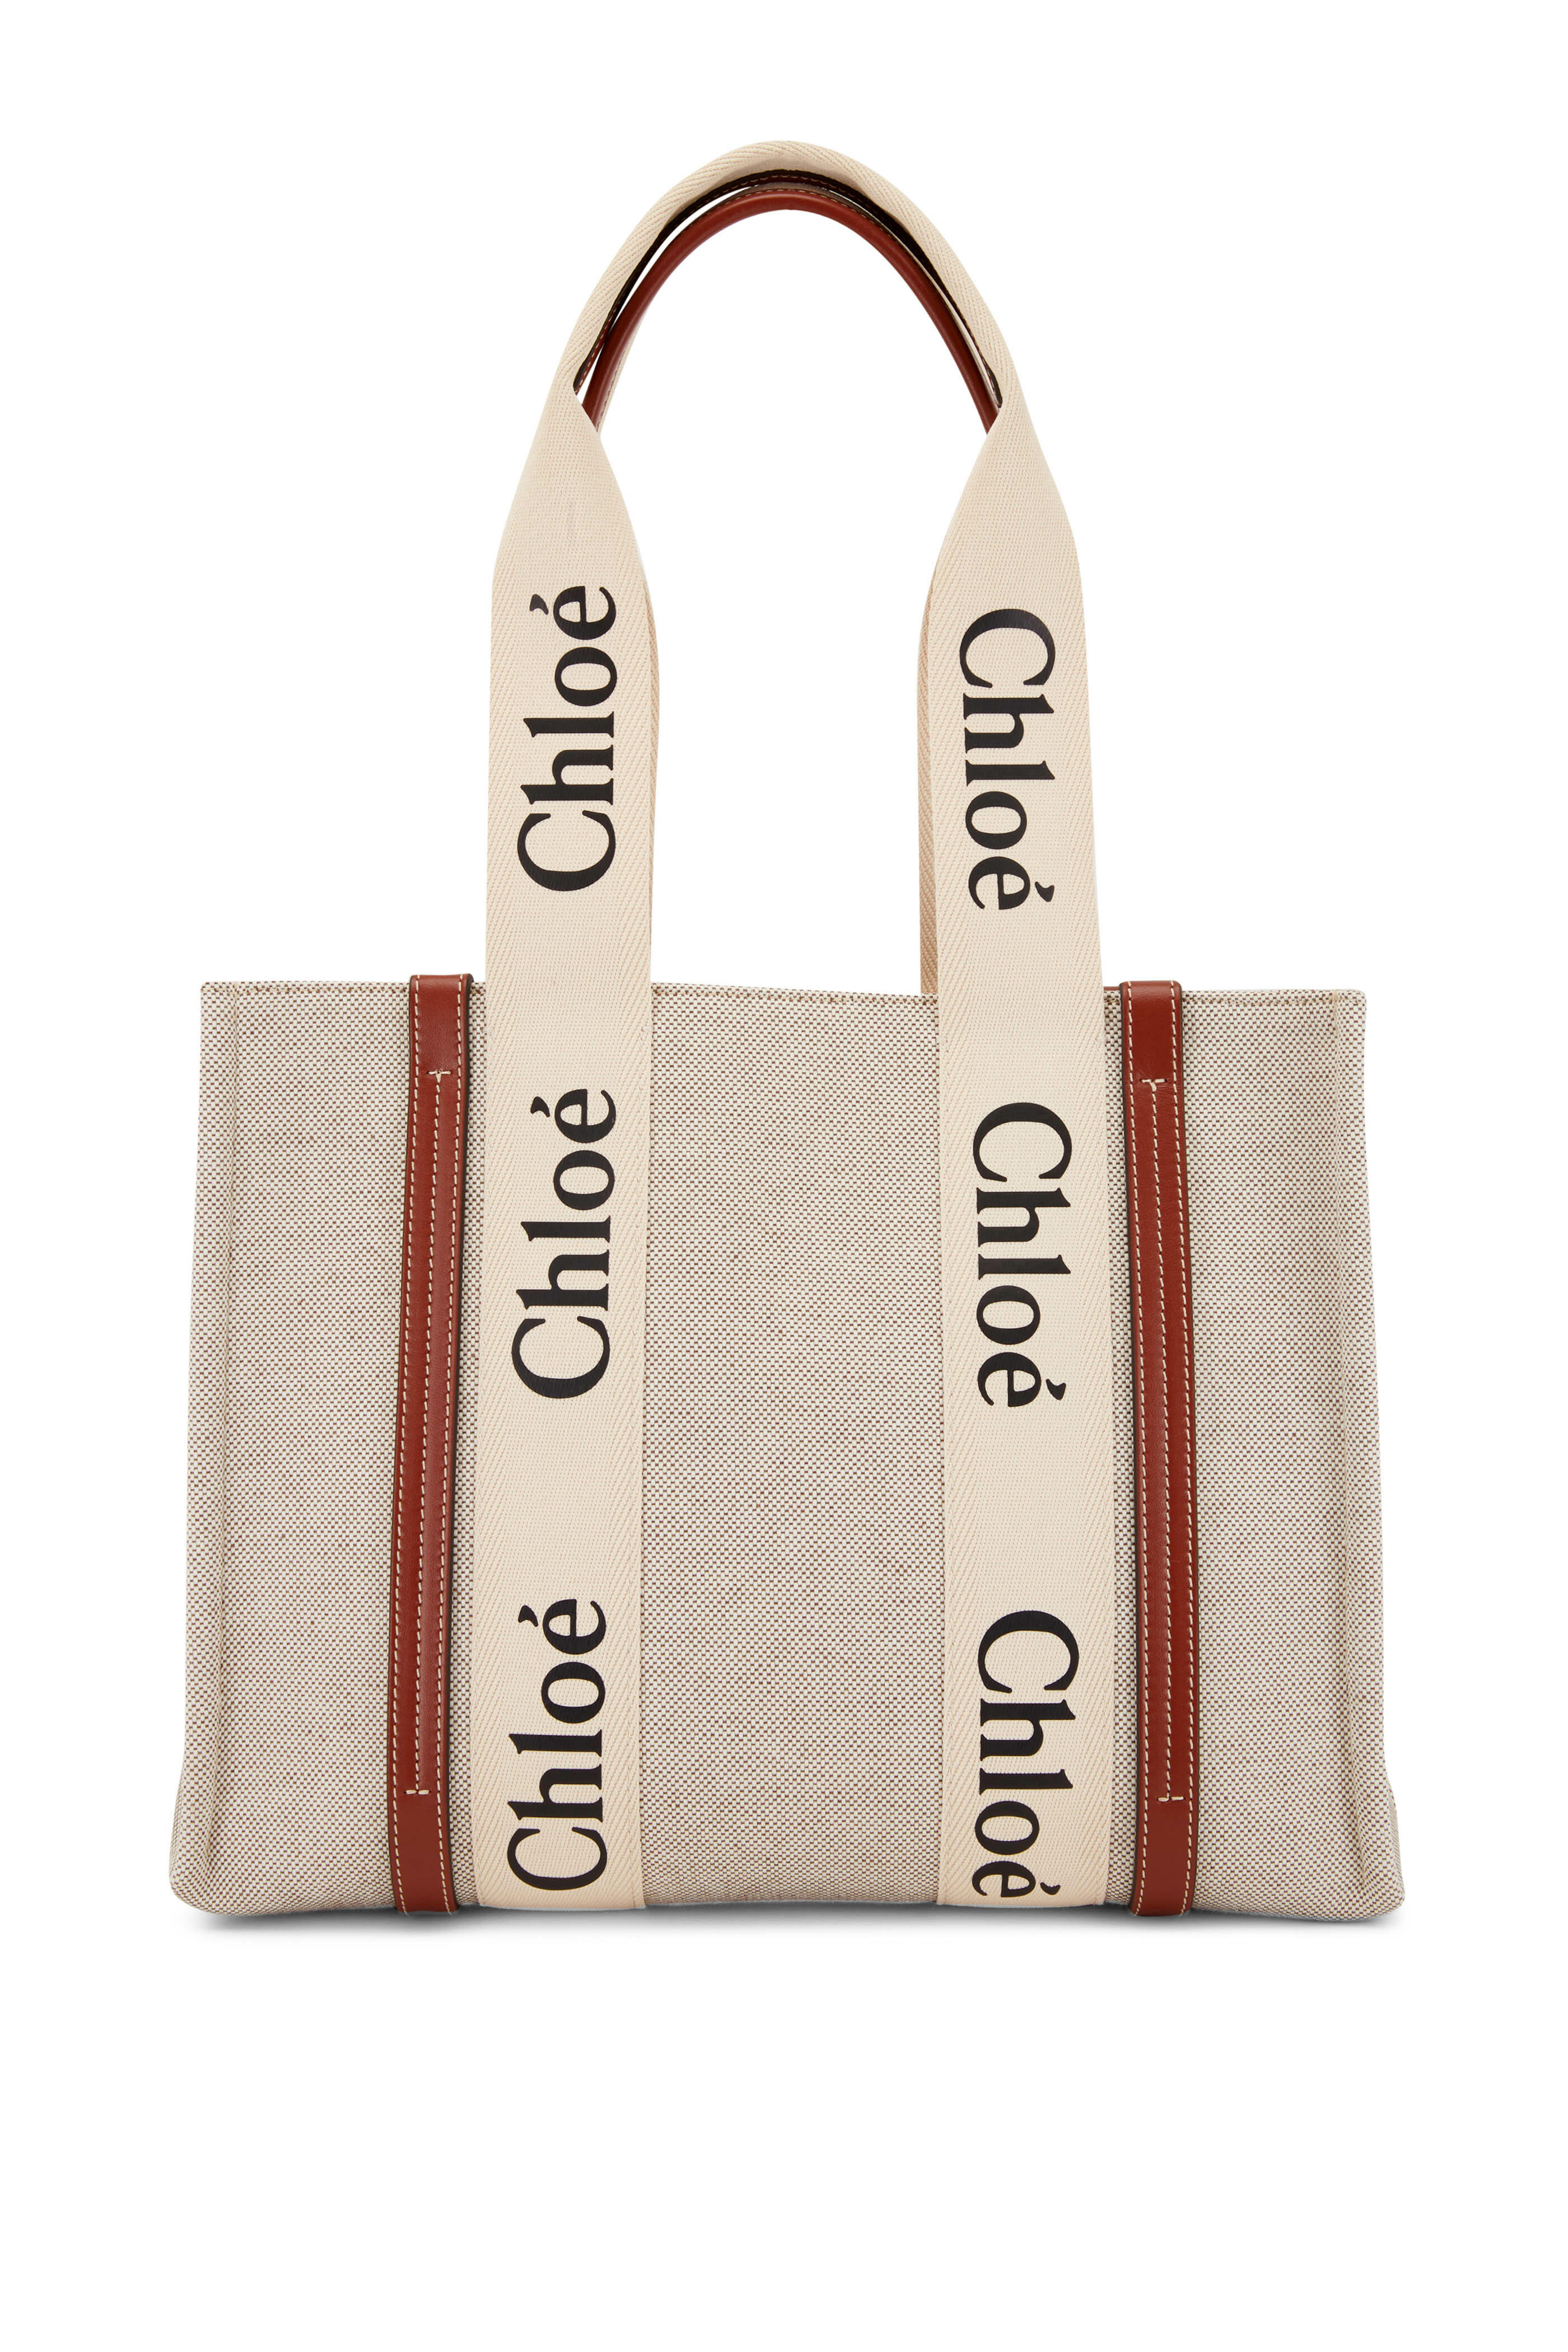 Chloé Women's Medium Sense East West Tote Bag